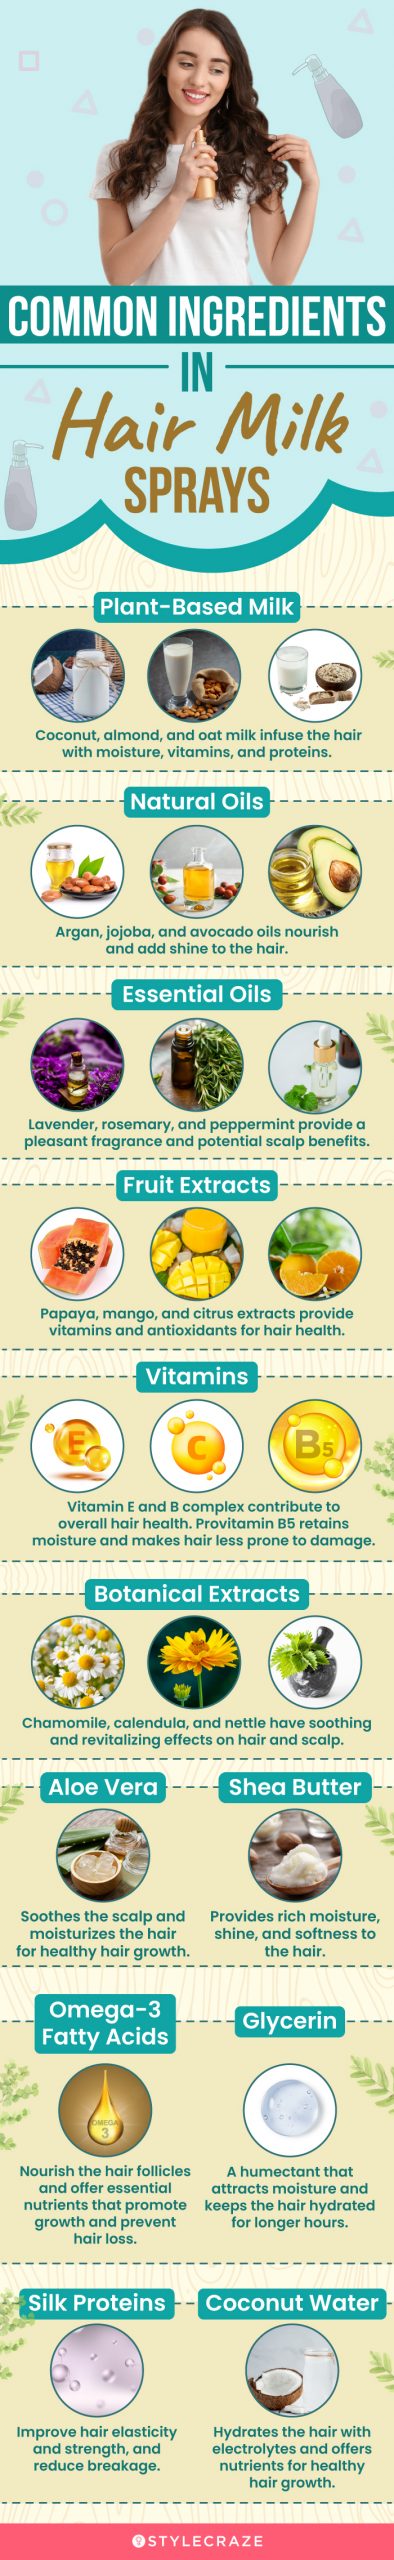 Common Ingredients In Hair Milk Sprays (infographic)